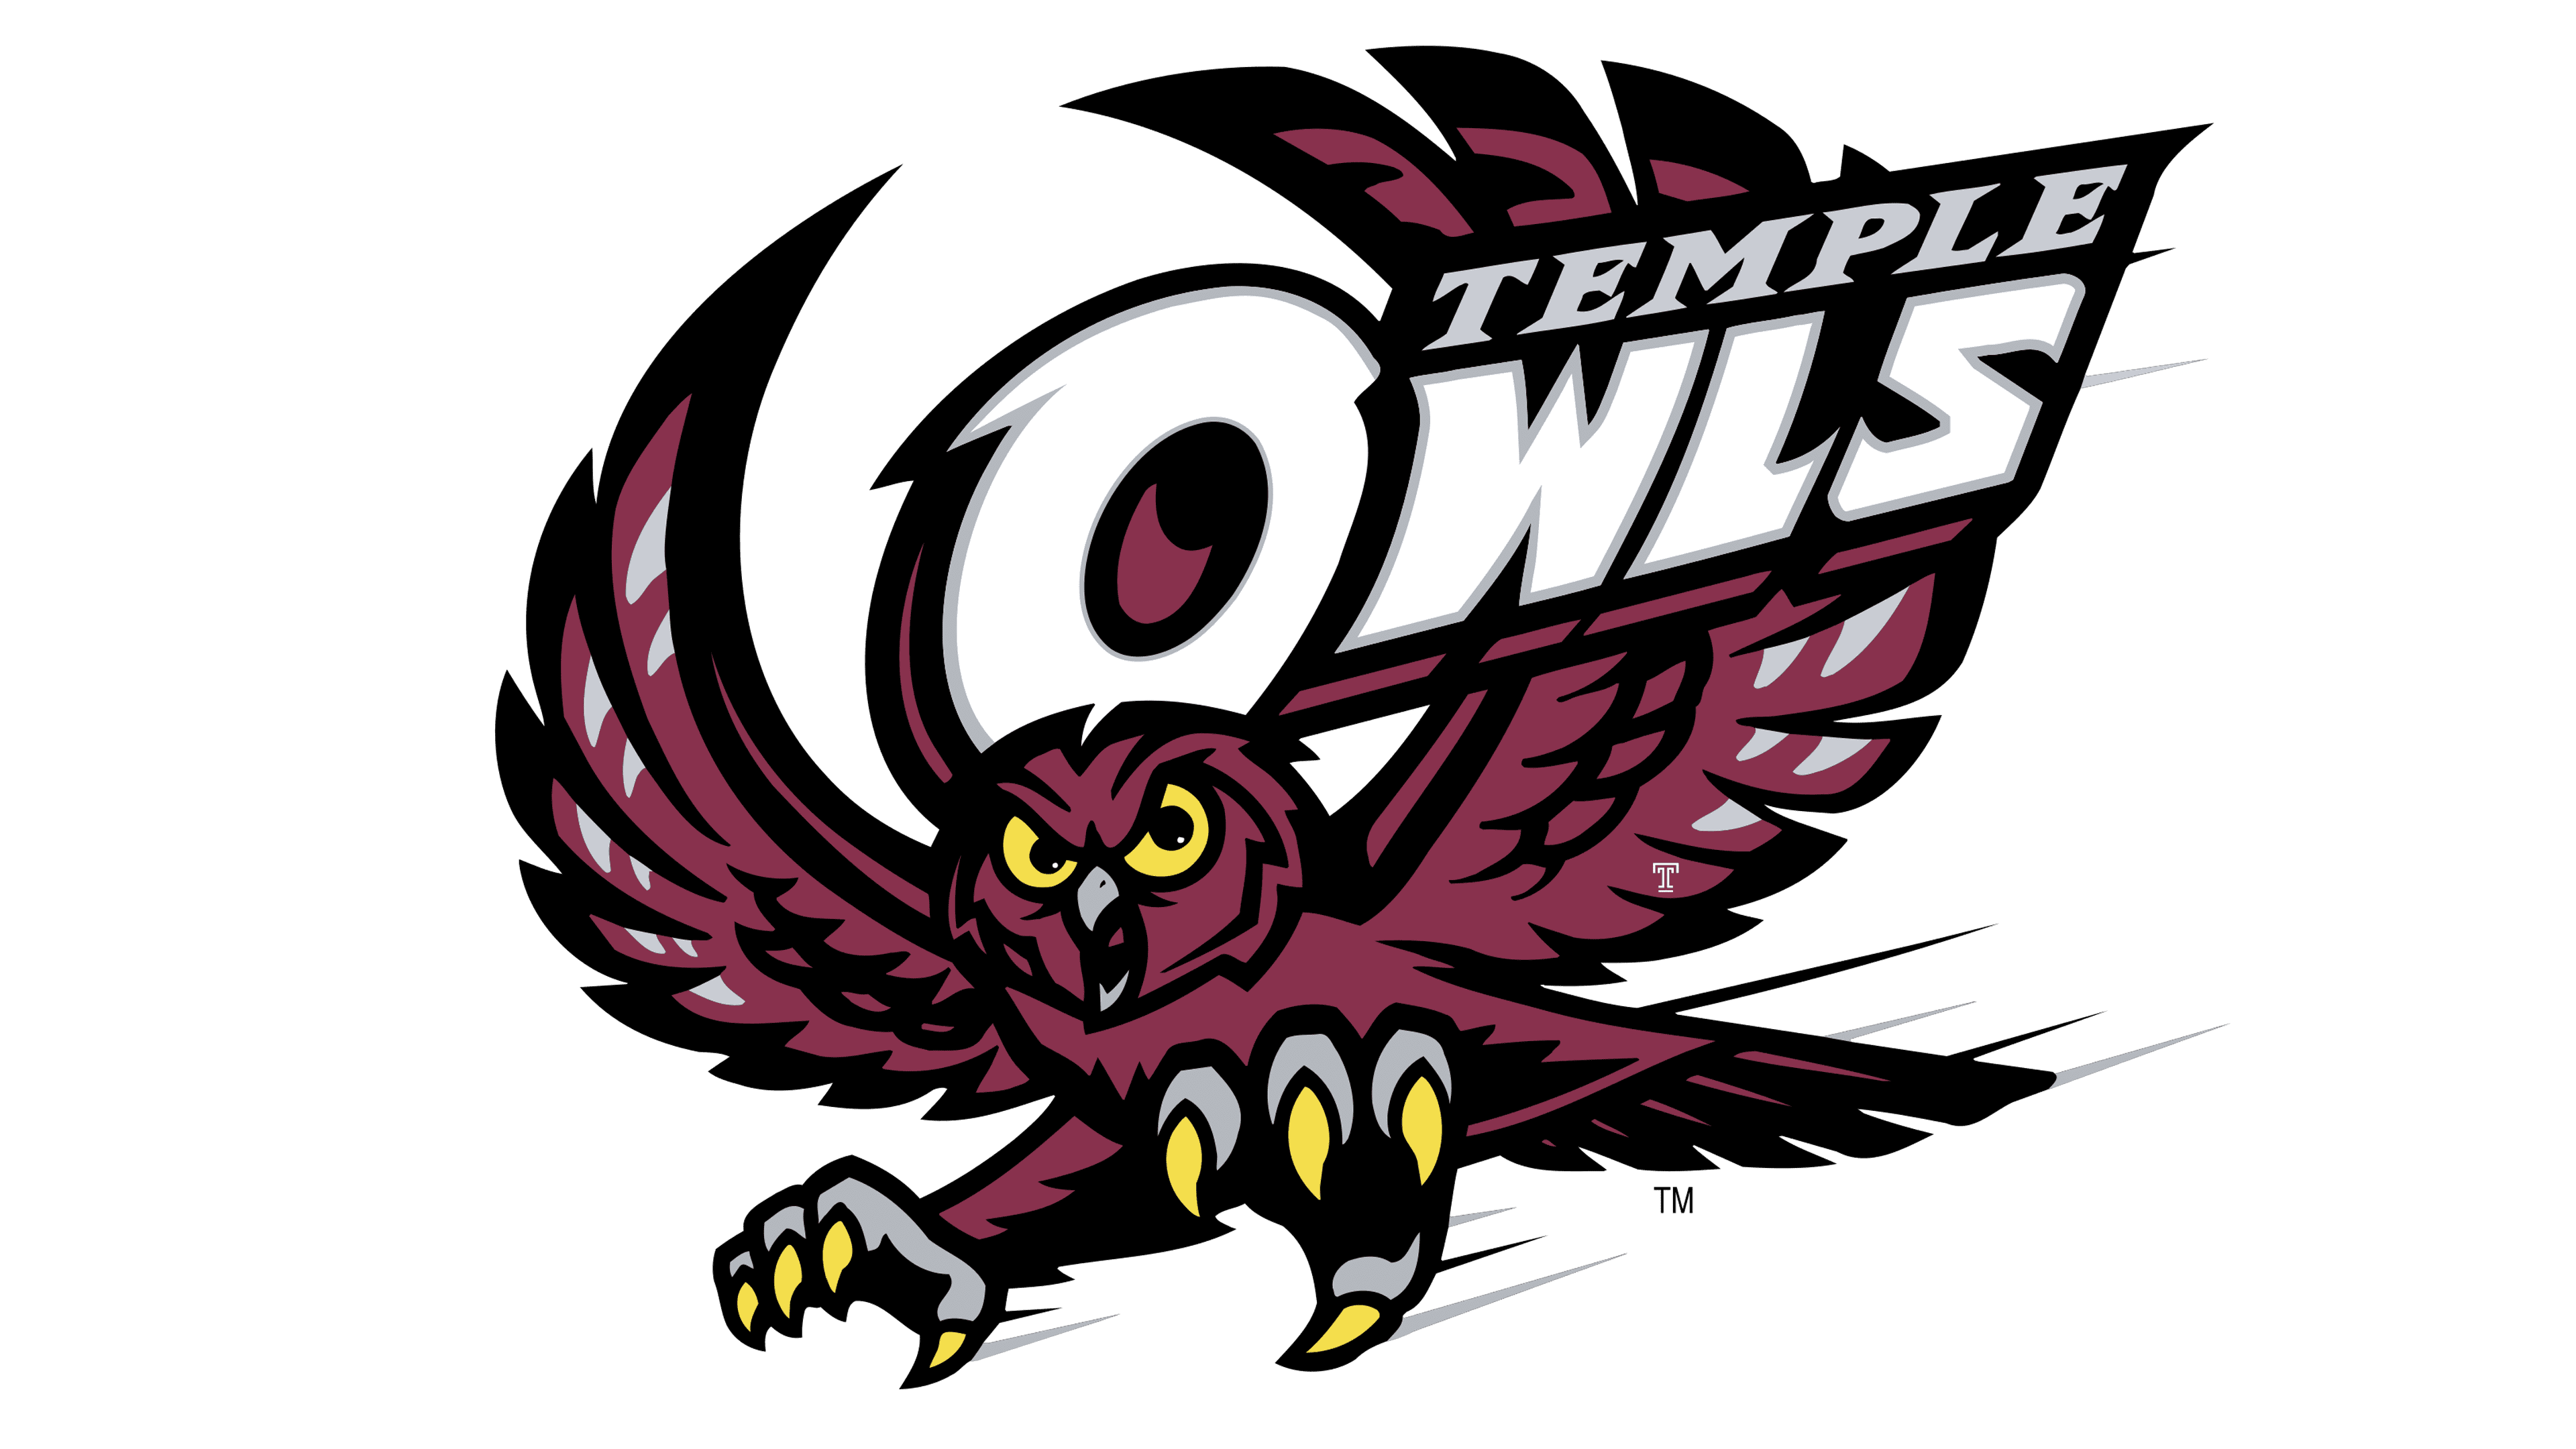 https://1000logos.net/wp-content/uploads/2021/07/Temple-Owls-logo.png